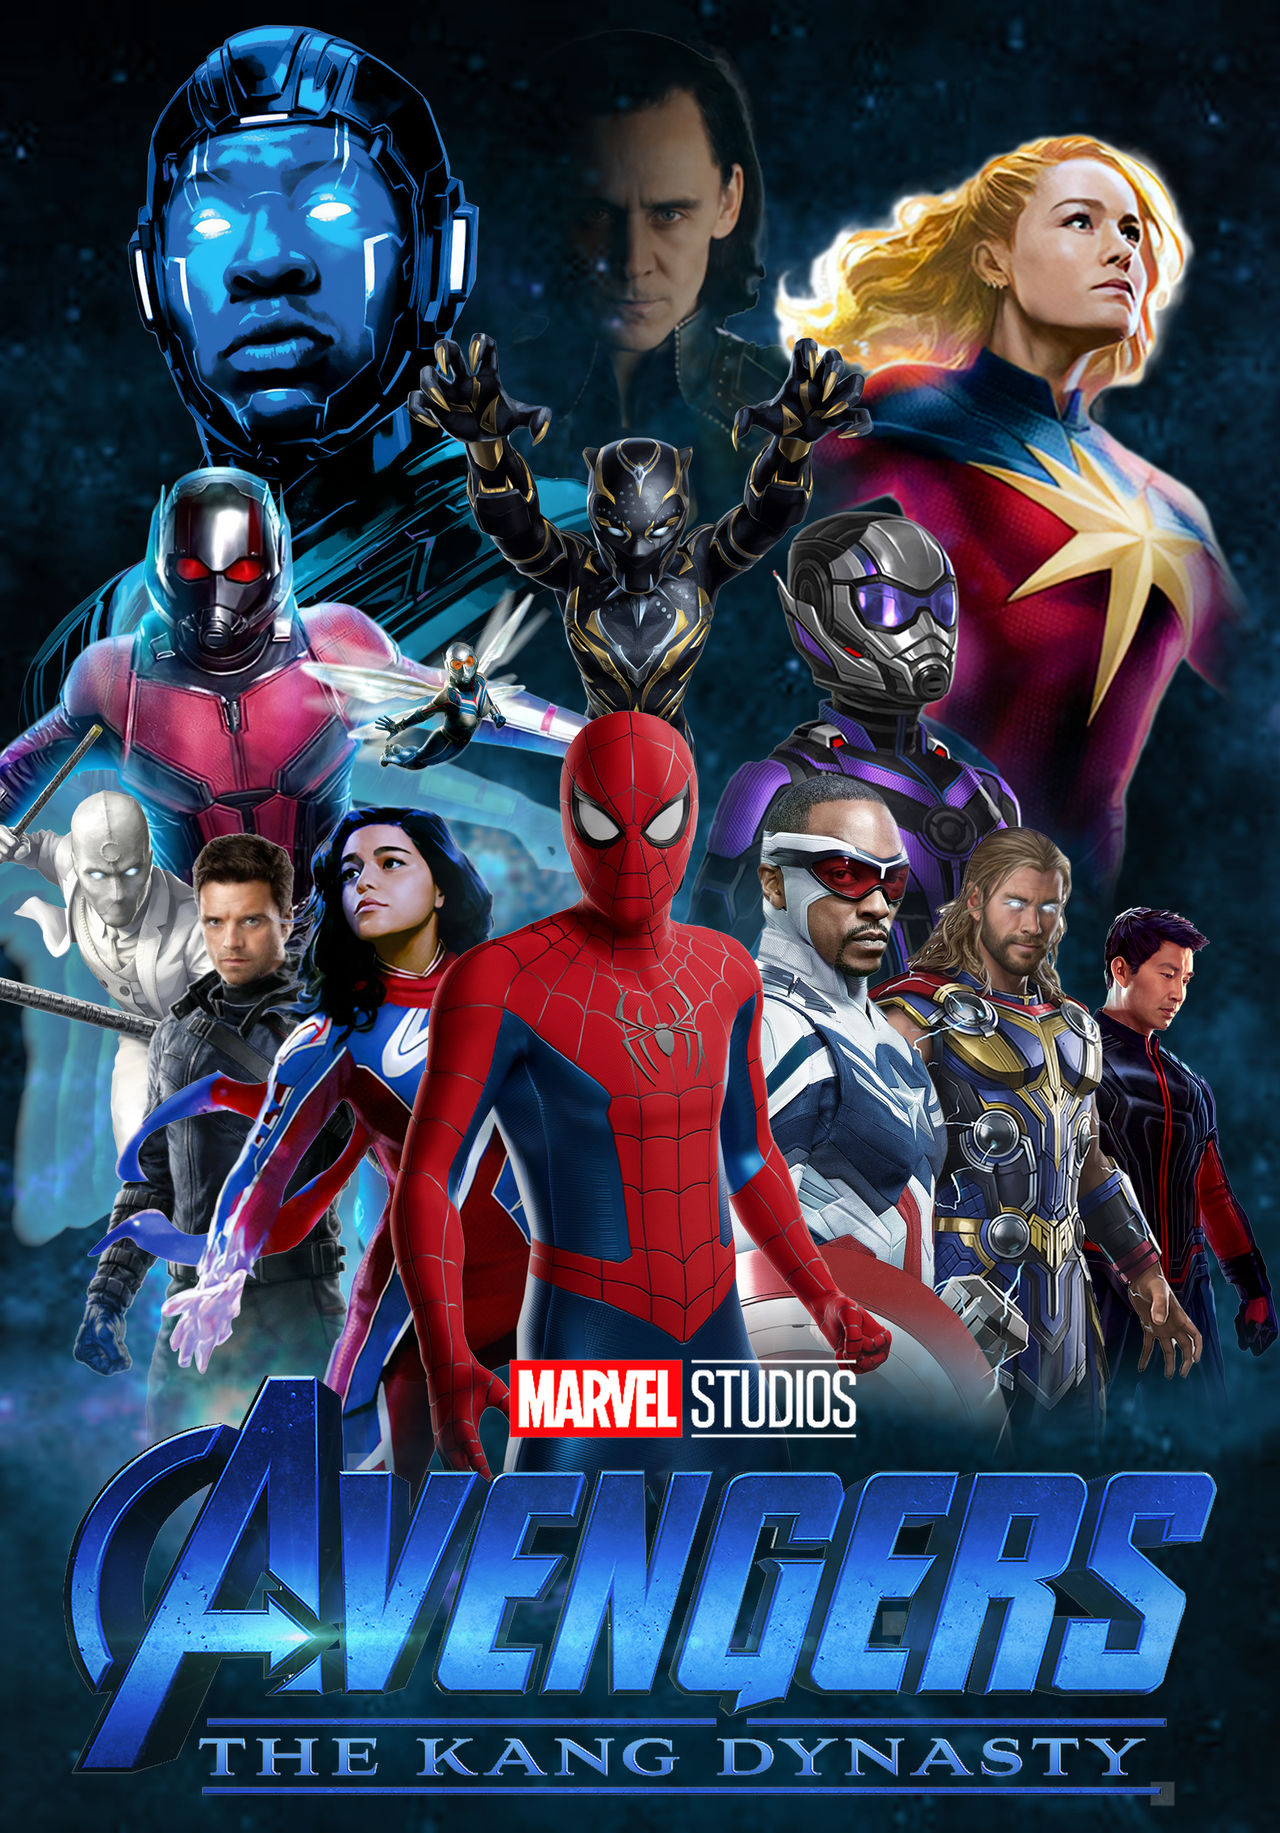 Avengers Secret Wars Poster Concept by MarvelMango on DeviantArt